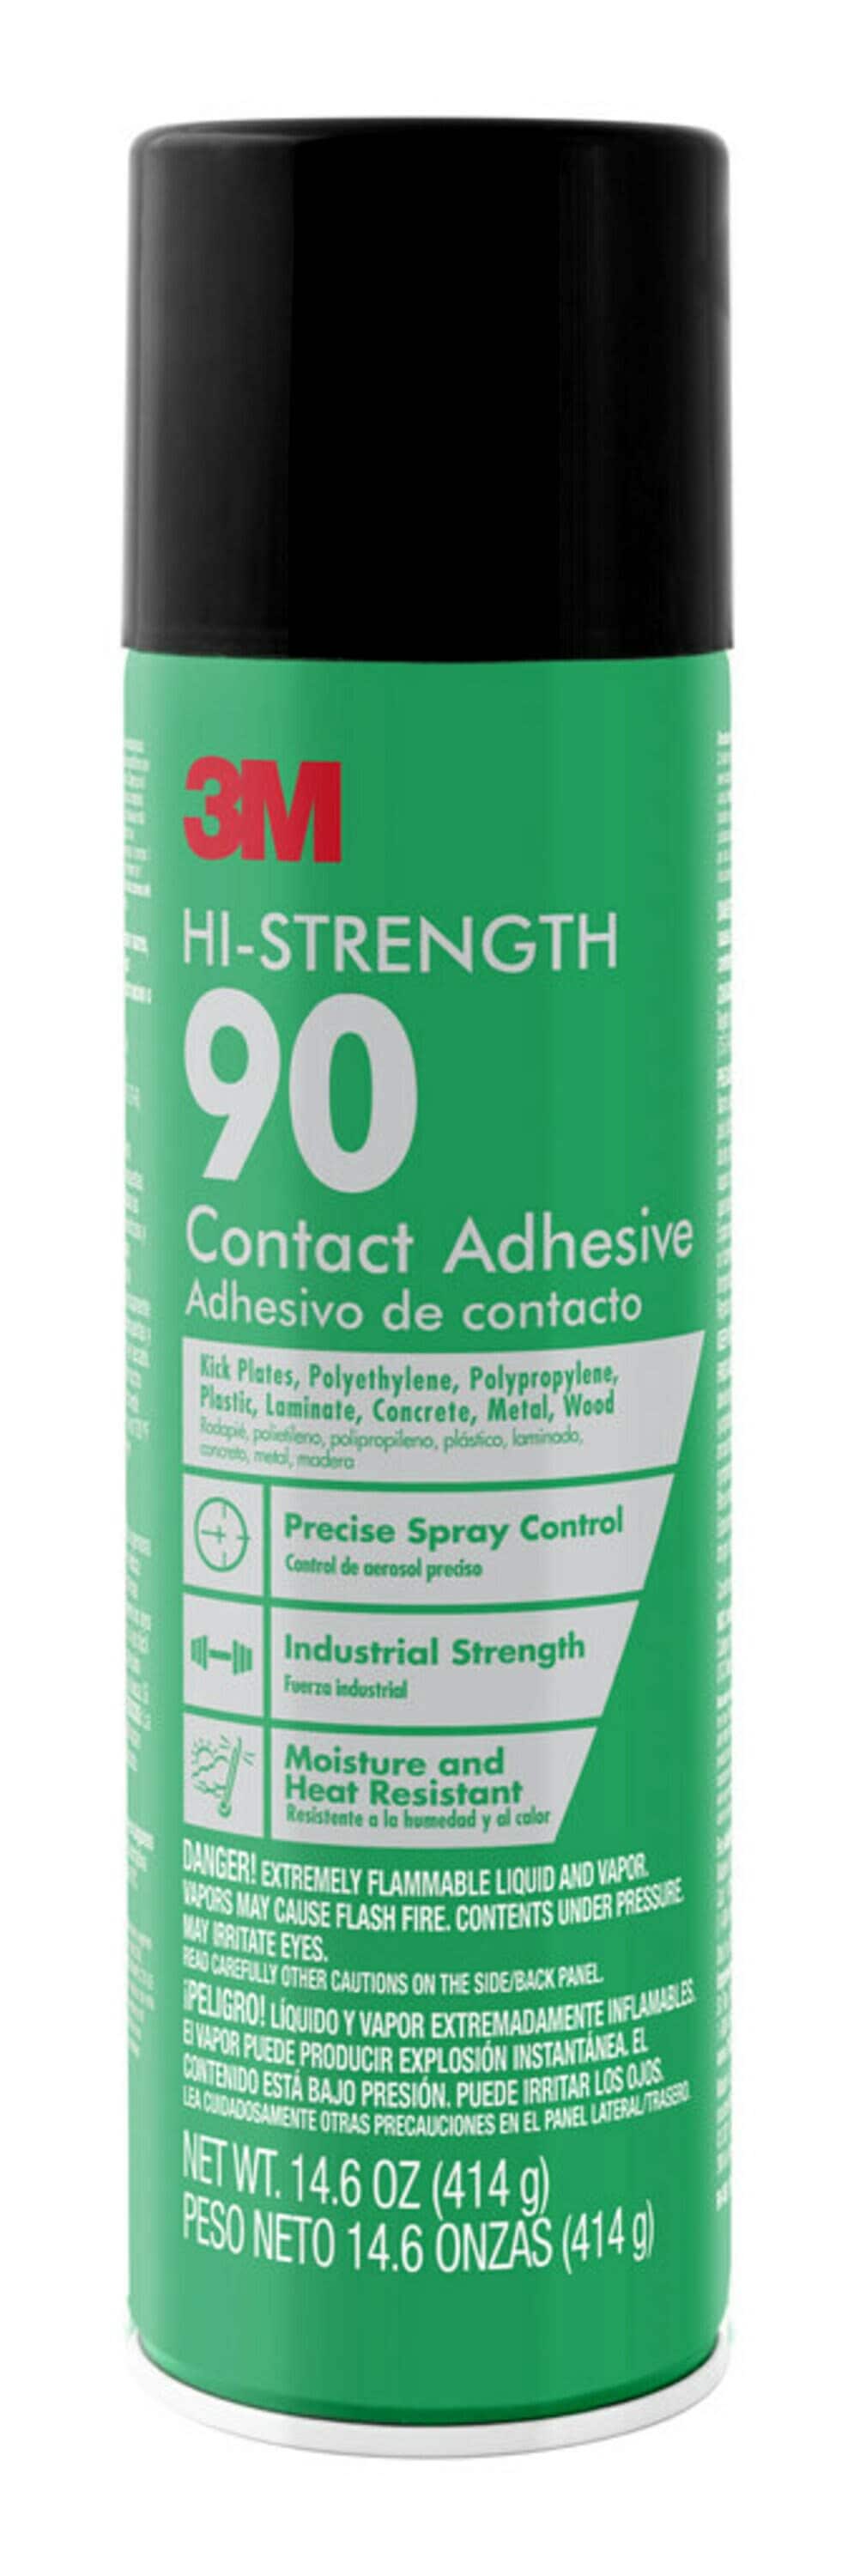 Buy 3m Headliner Adhesive Spray online